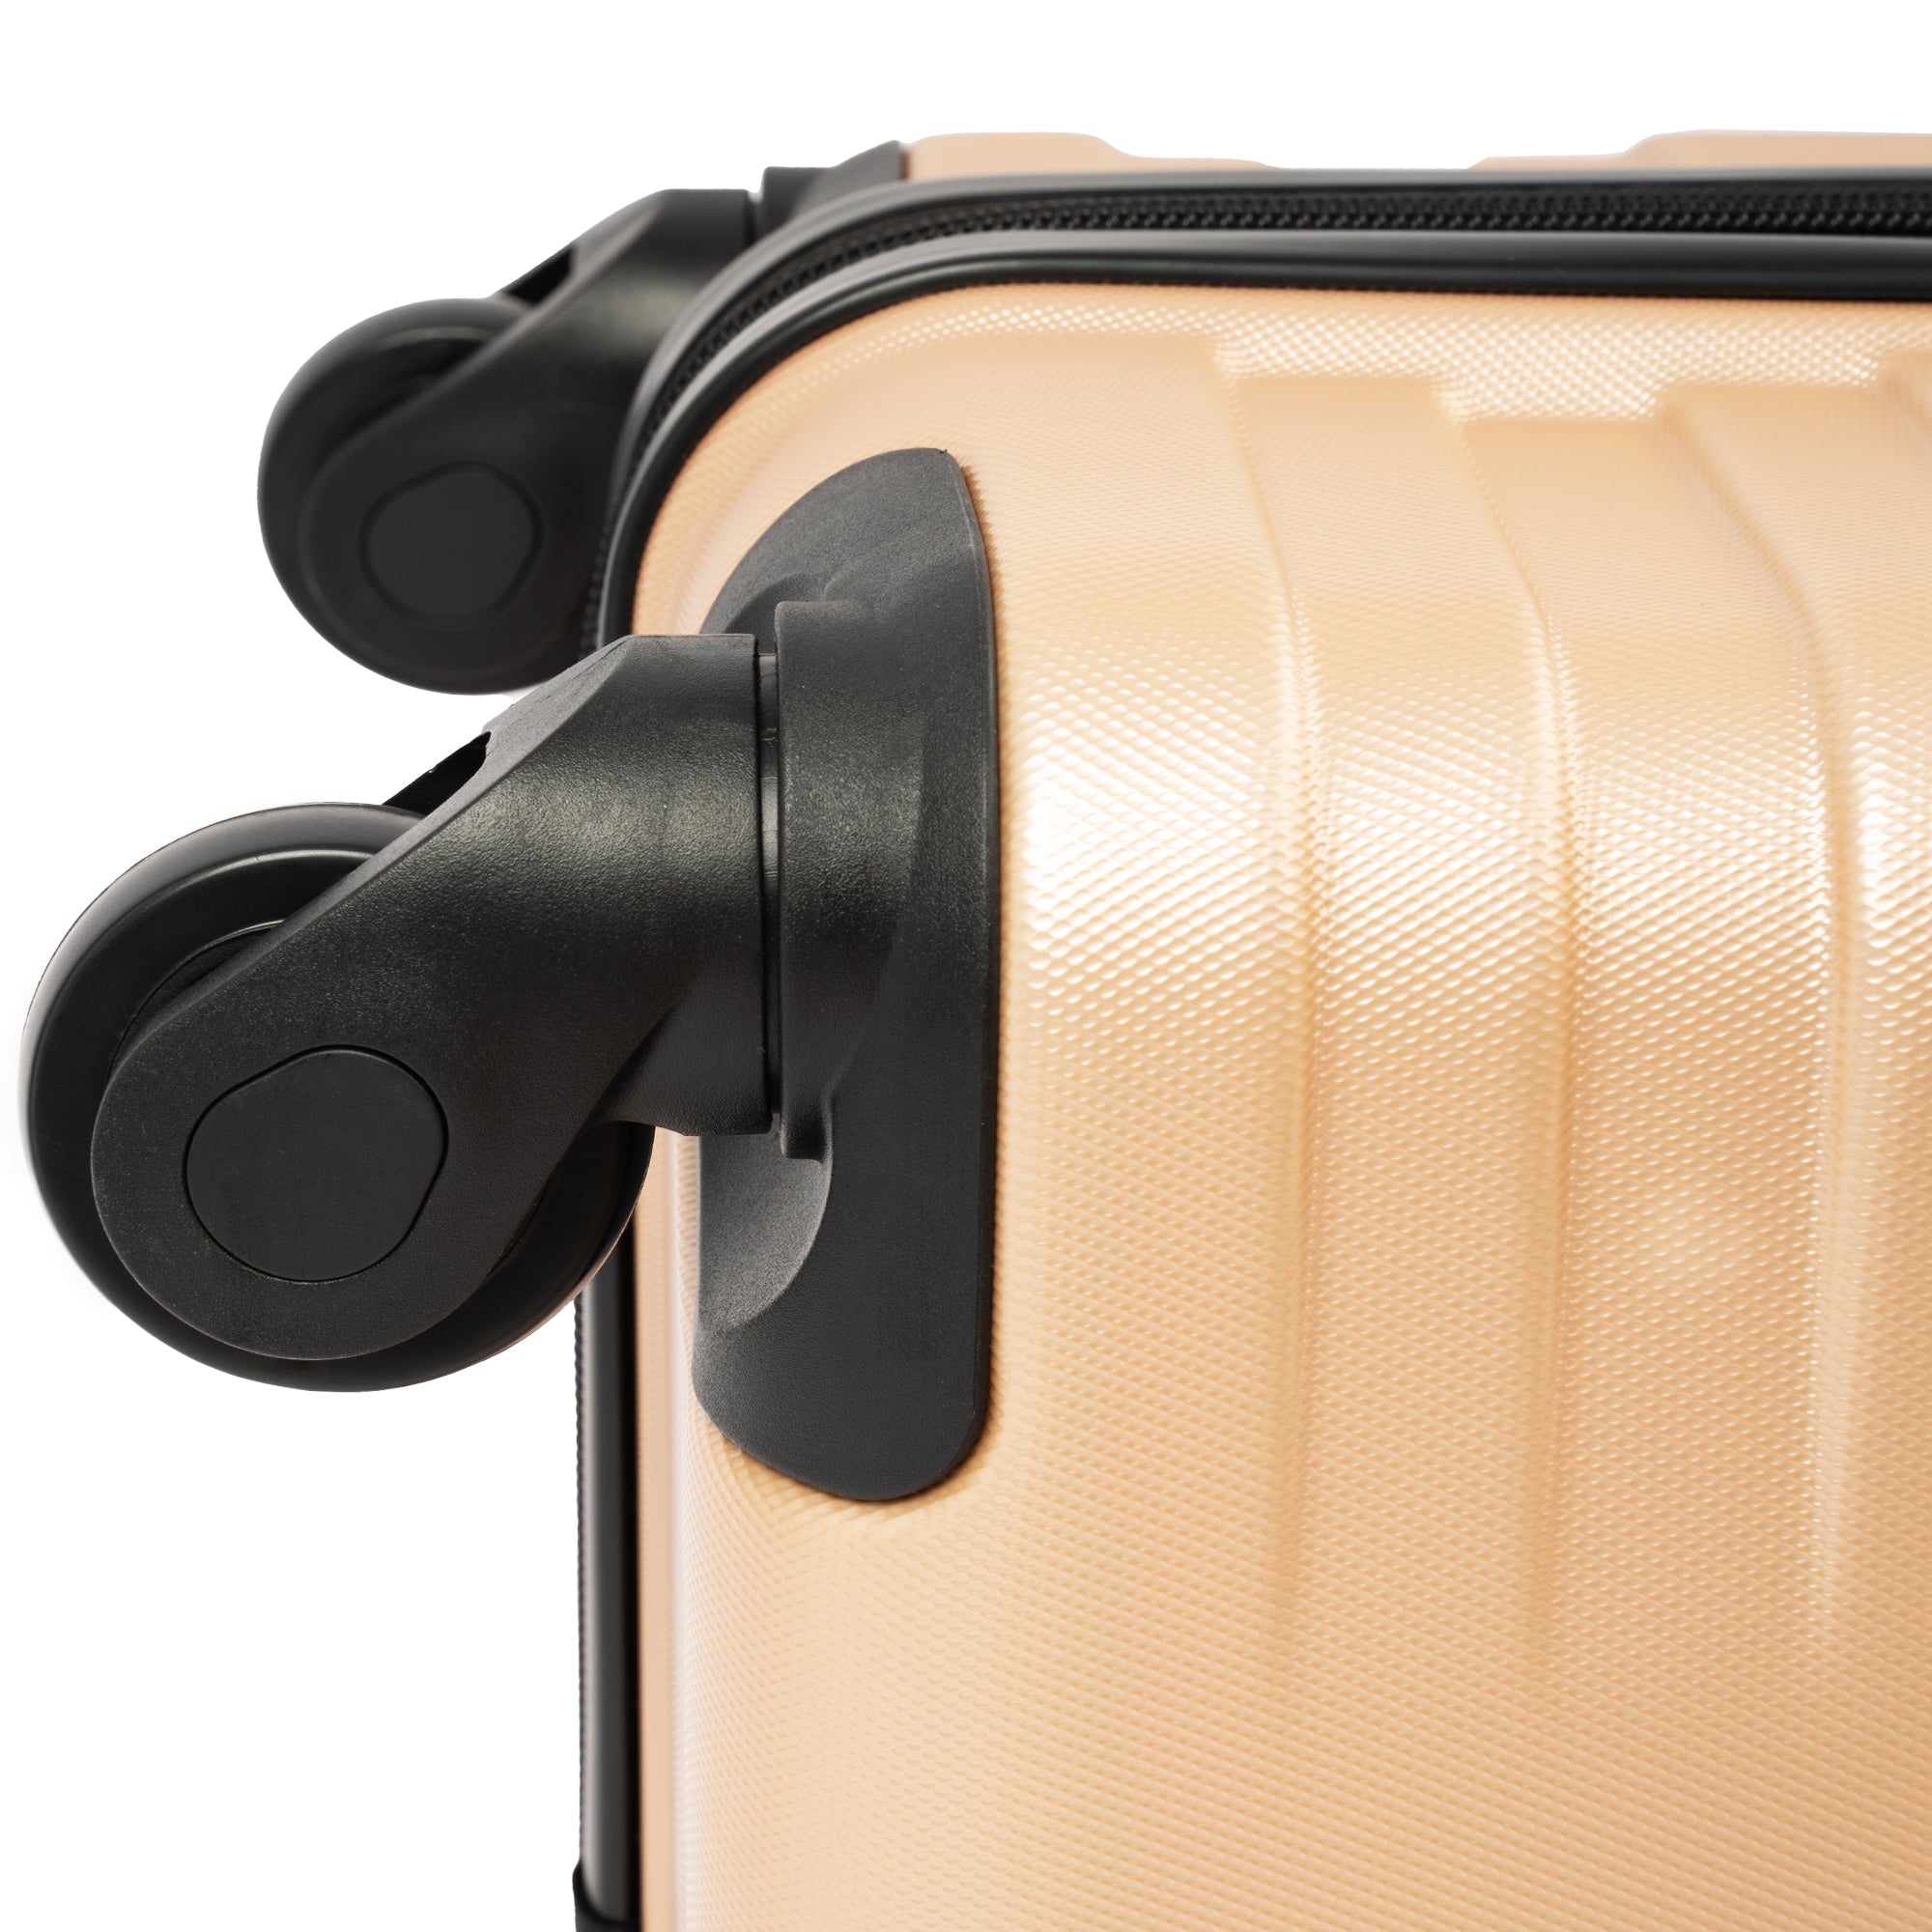 Merax Luggage with TSA Lock Spinner Wheels Hardside rose gold-abs